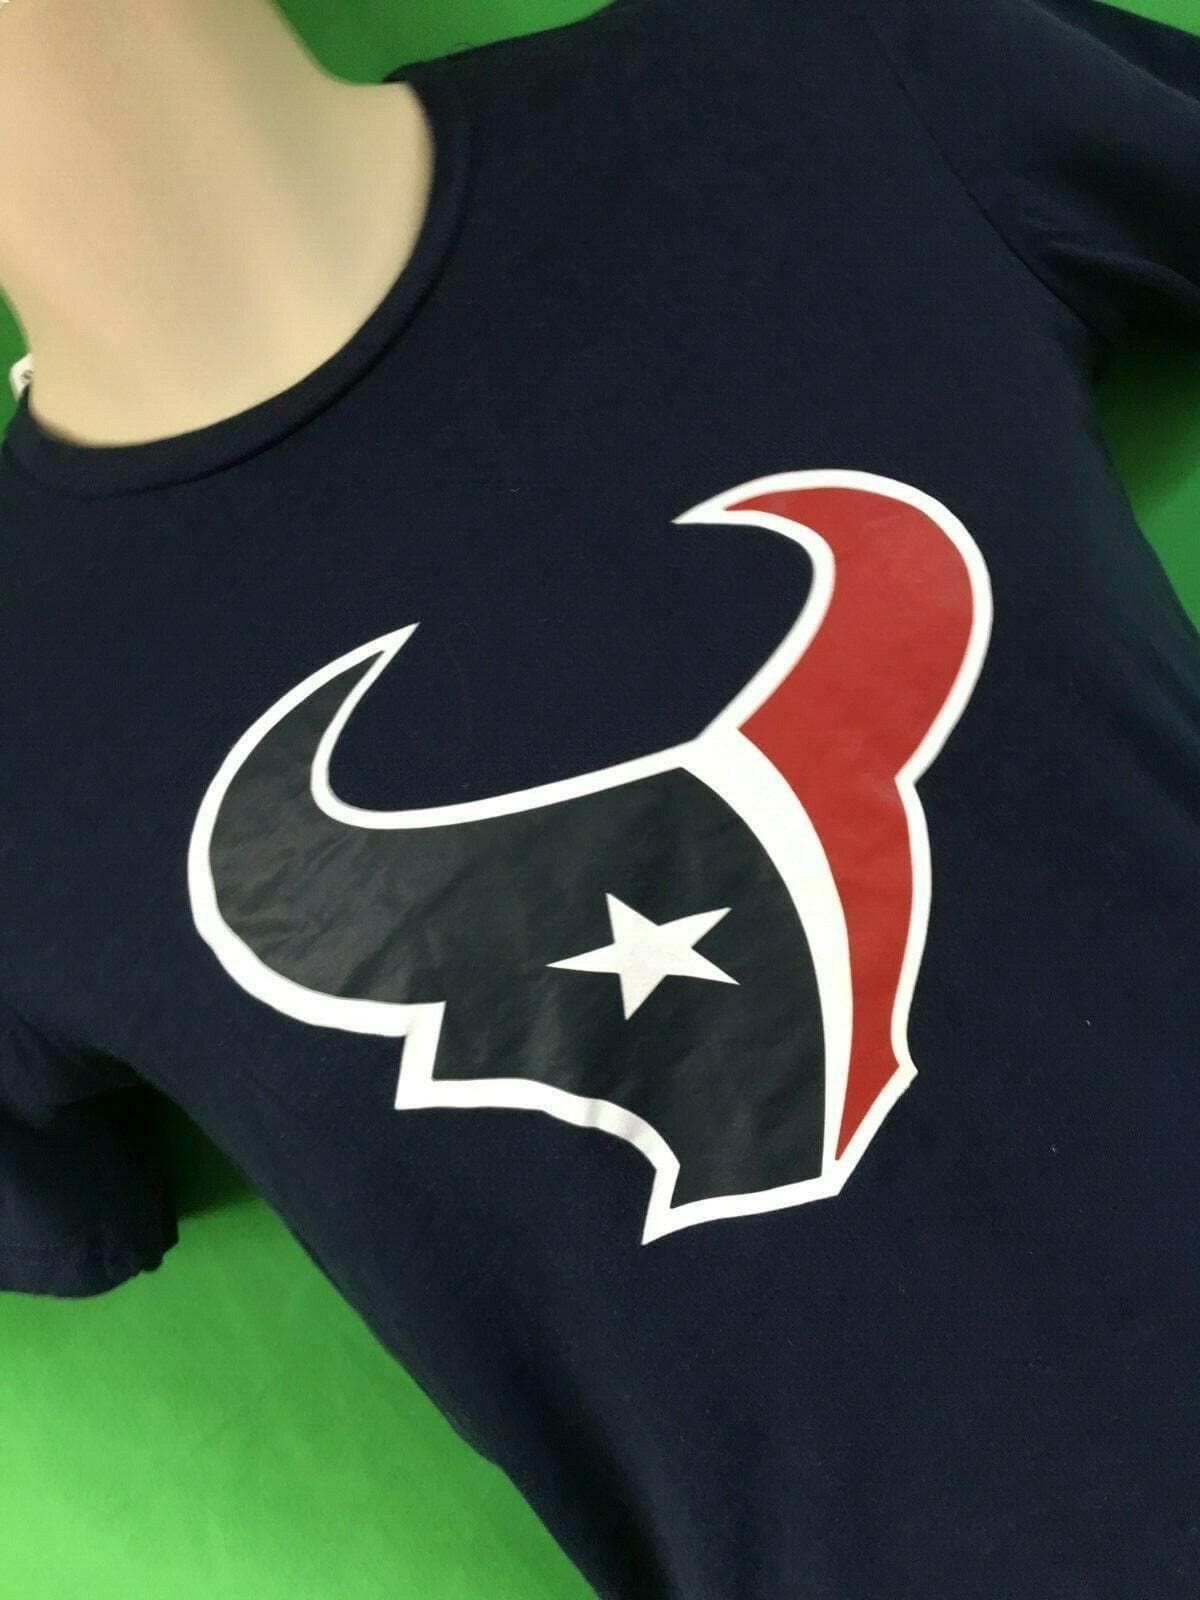 NFL Houston Texans Logo T-Shirt Youth Medium 10-12